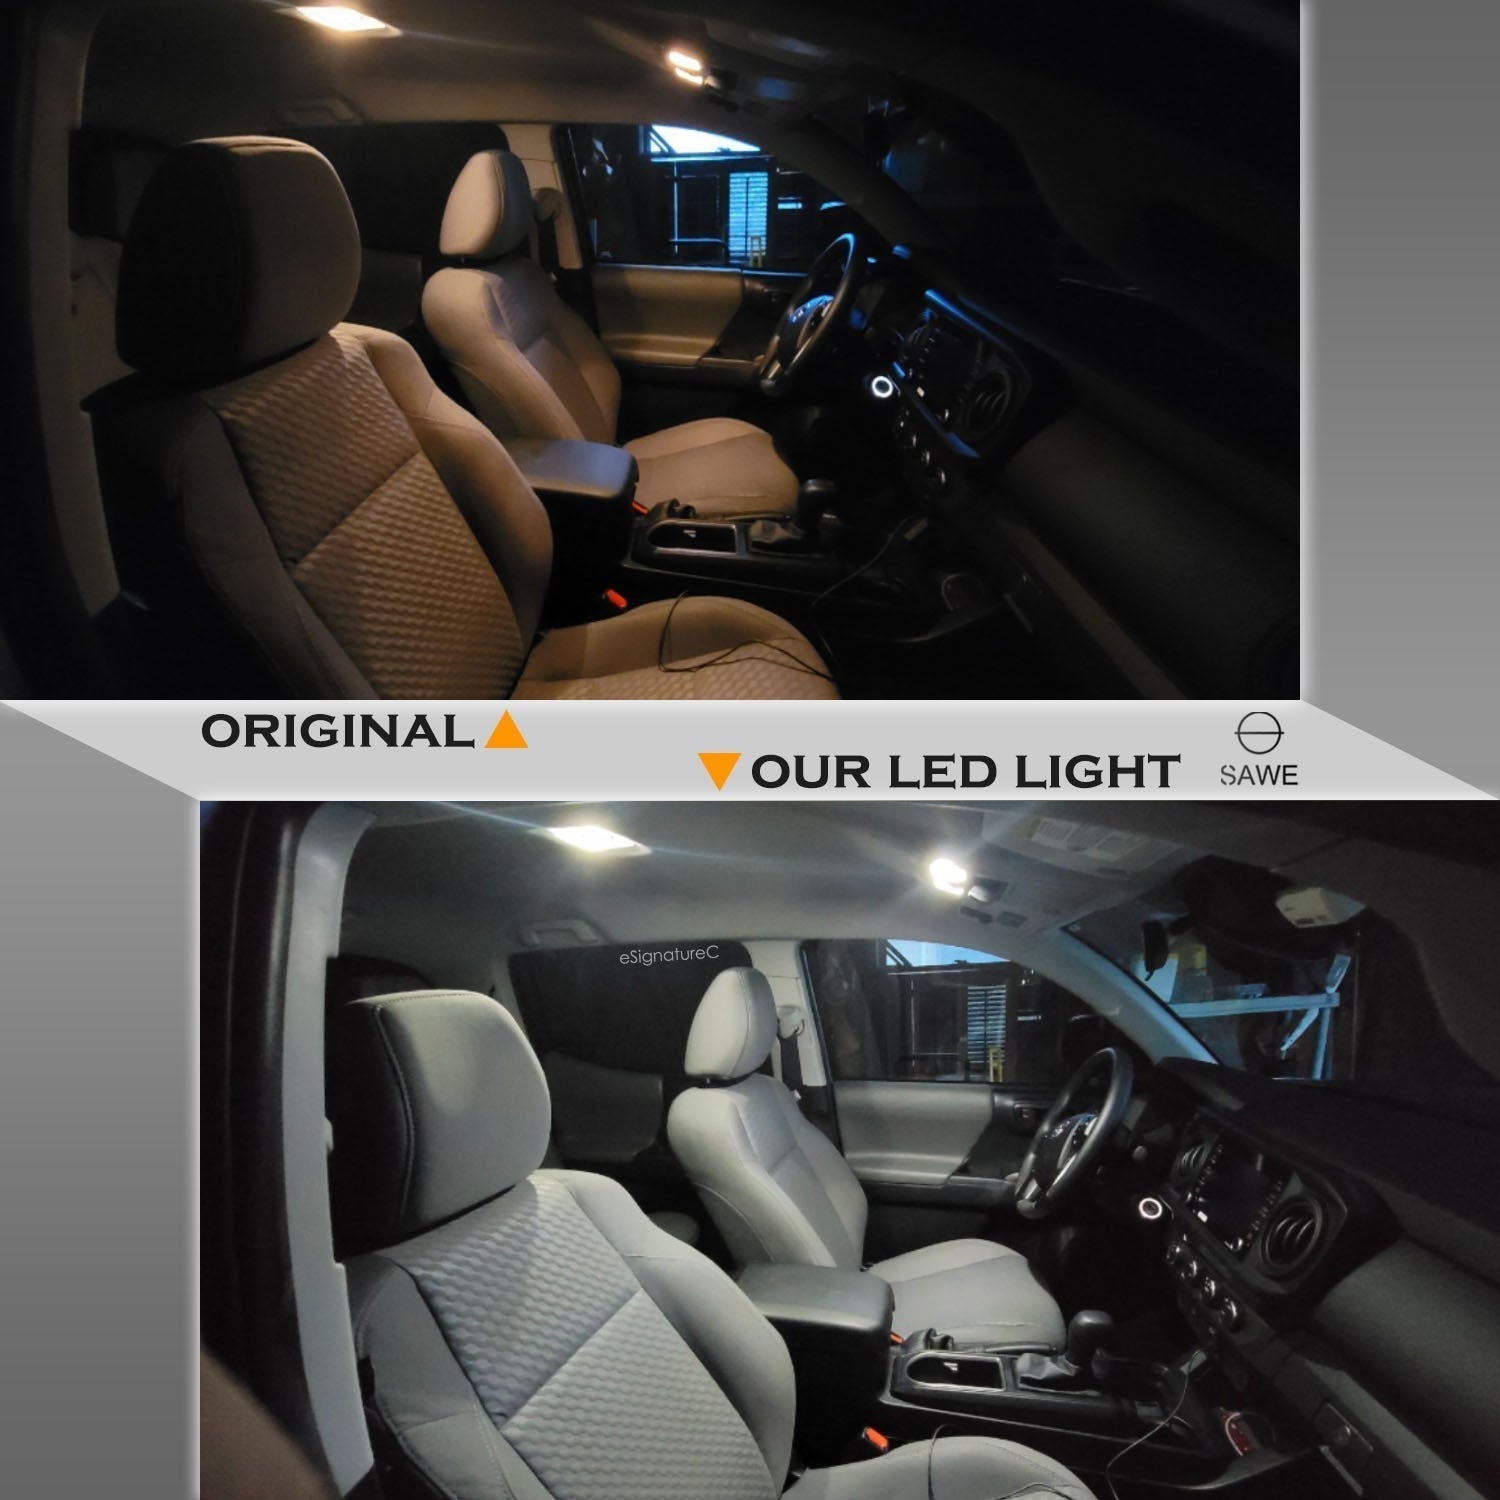 For Dodge Challenger Interior LED Lights - Dome & Map Lights Package Kit for 2008 - 2014 - White